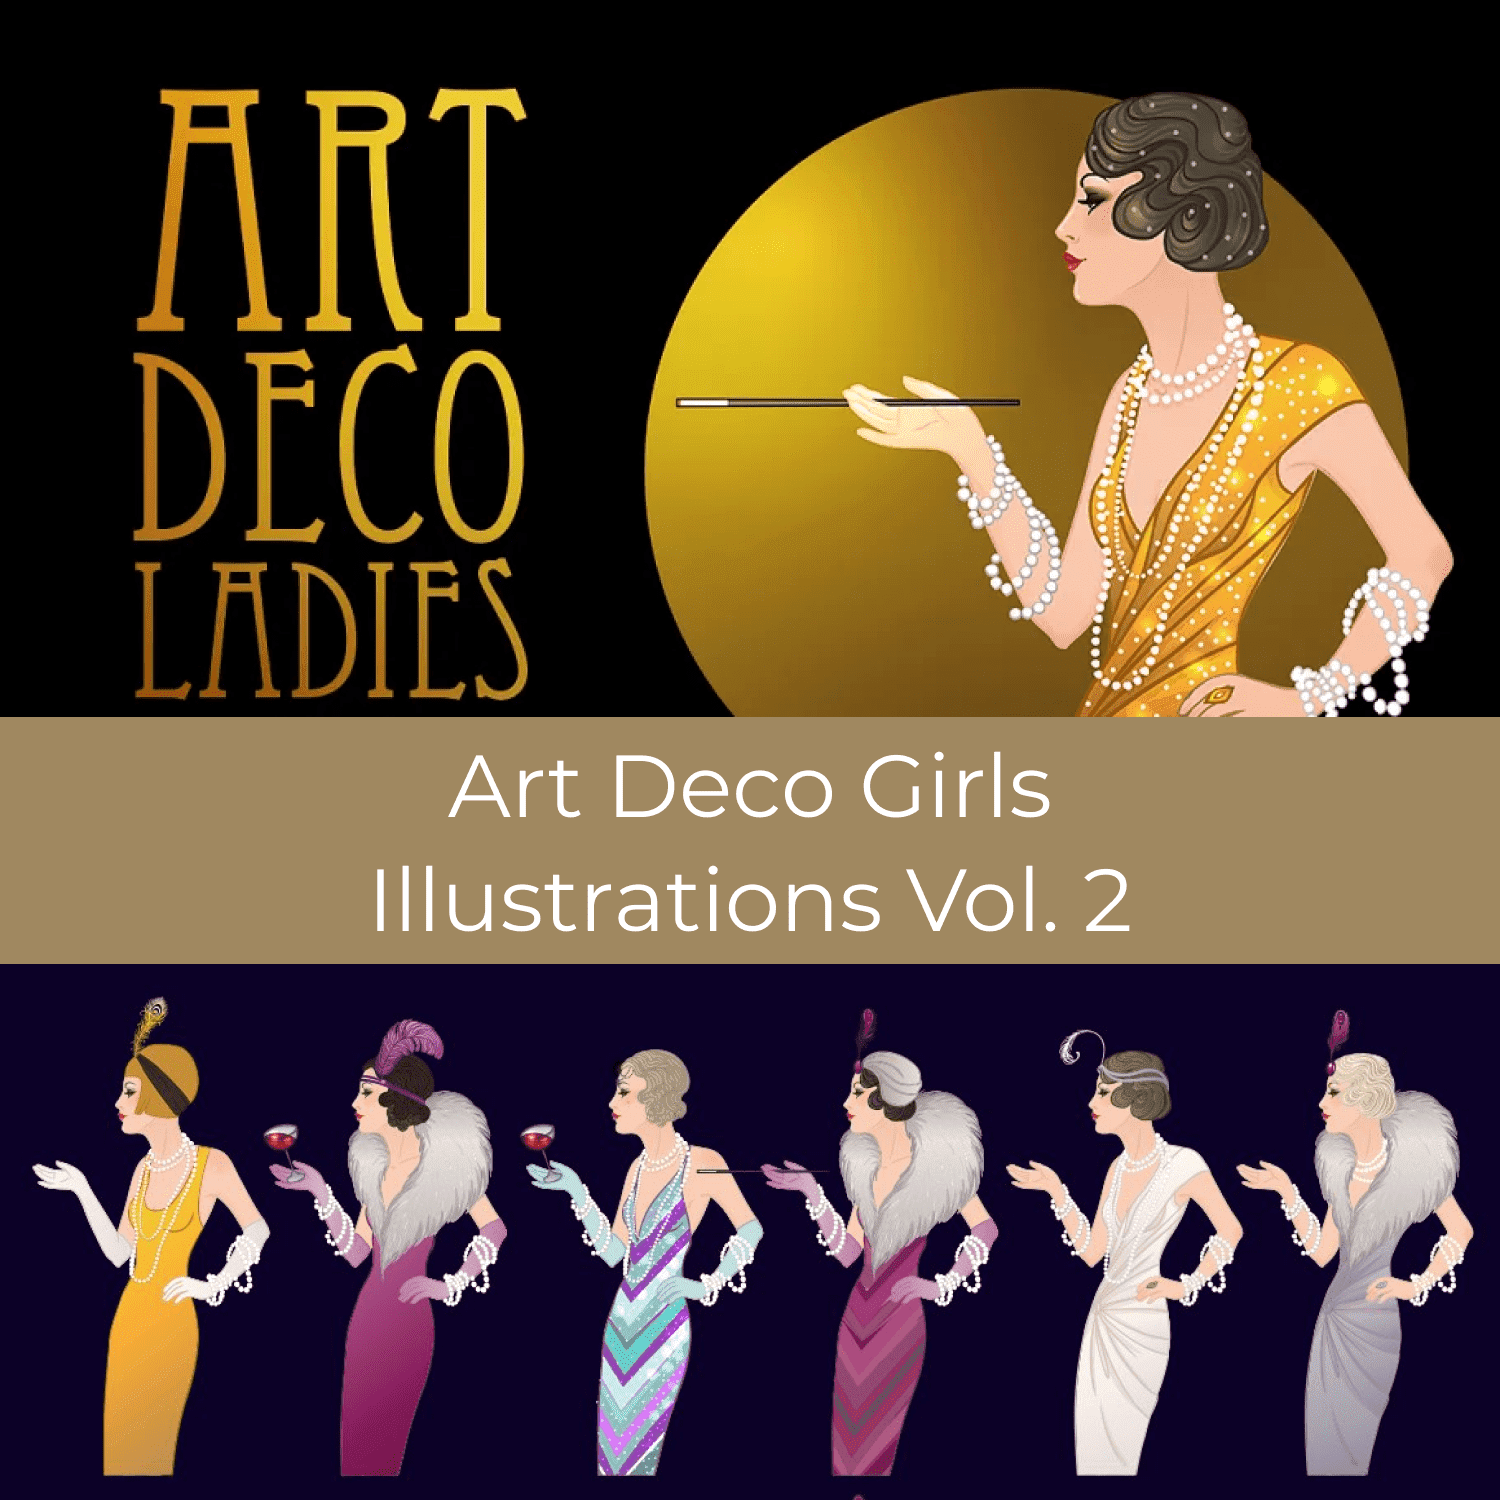 Art Deco Girls Illustrations Vol. 2 preview image.